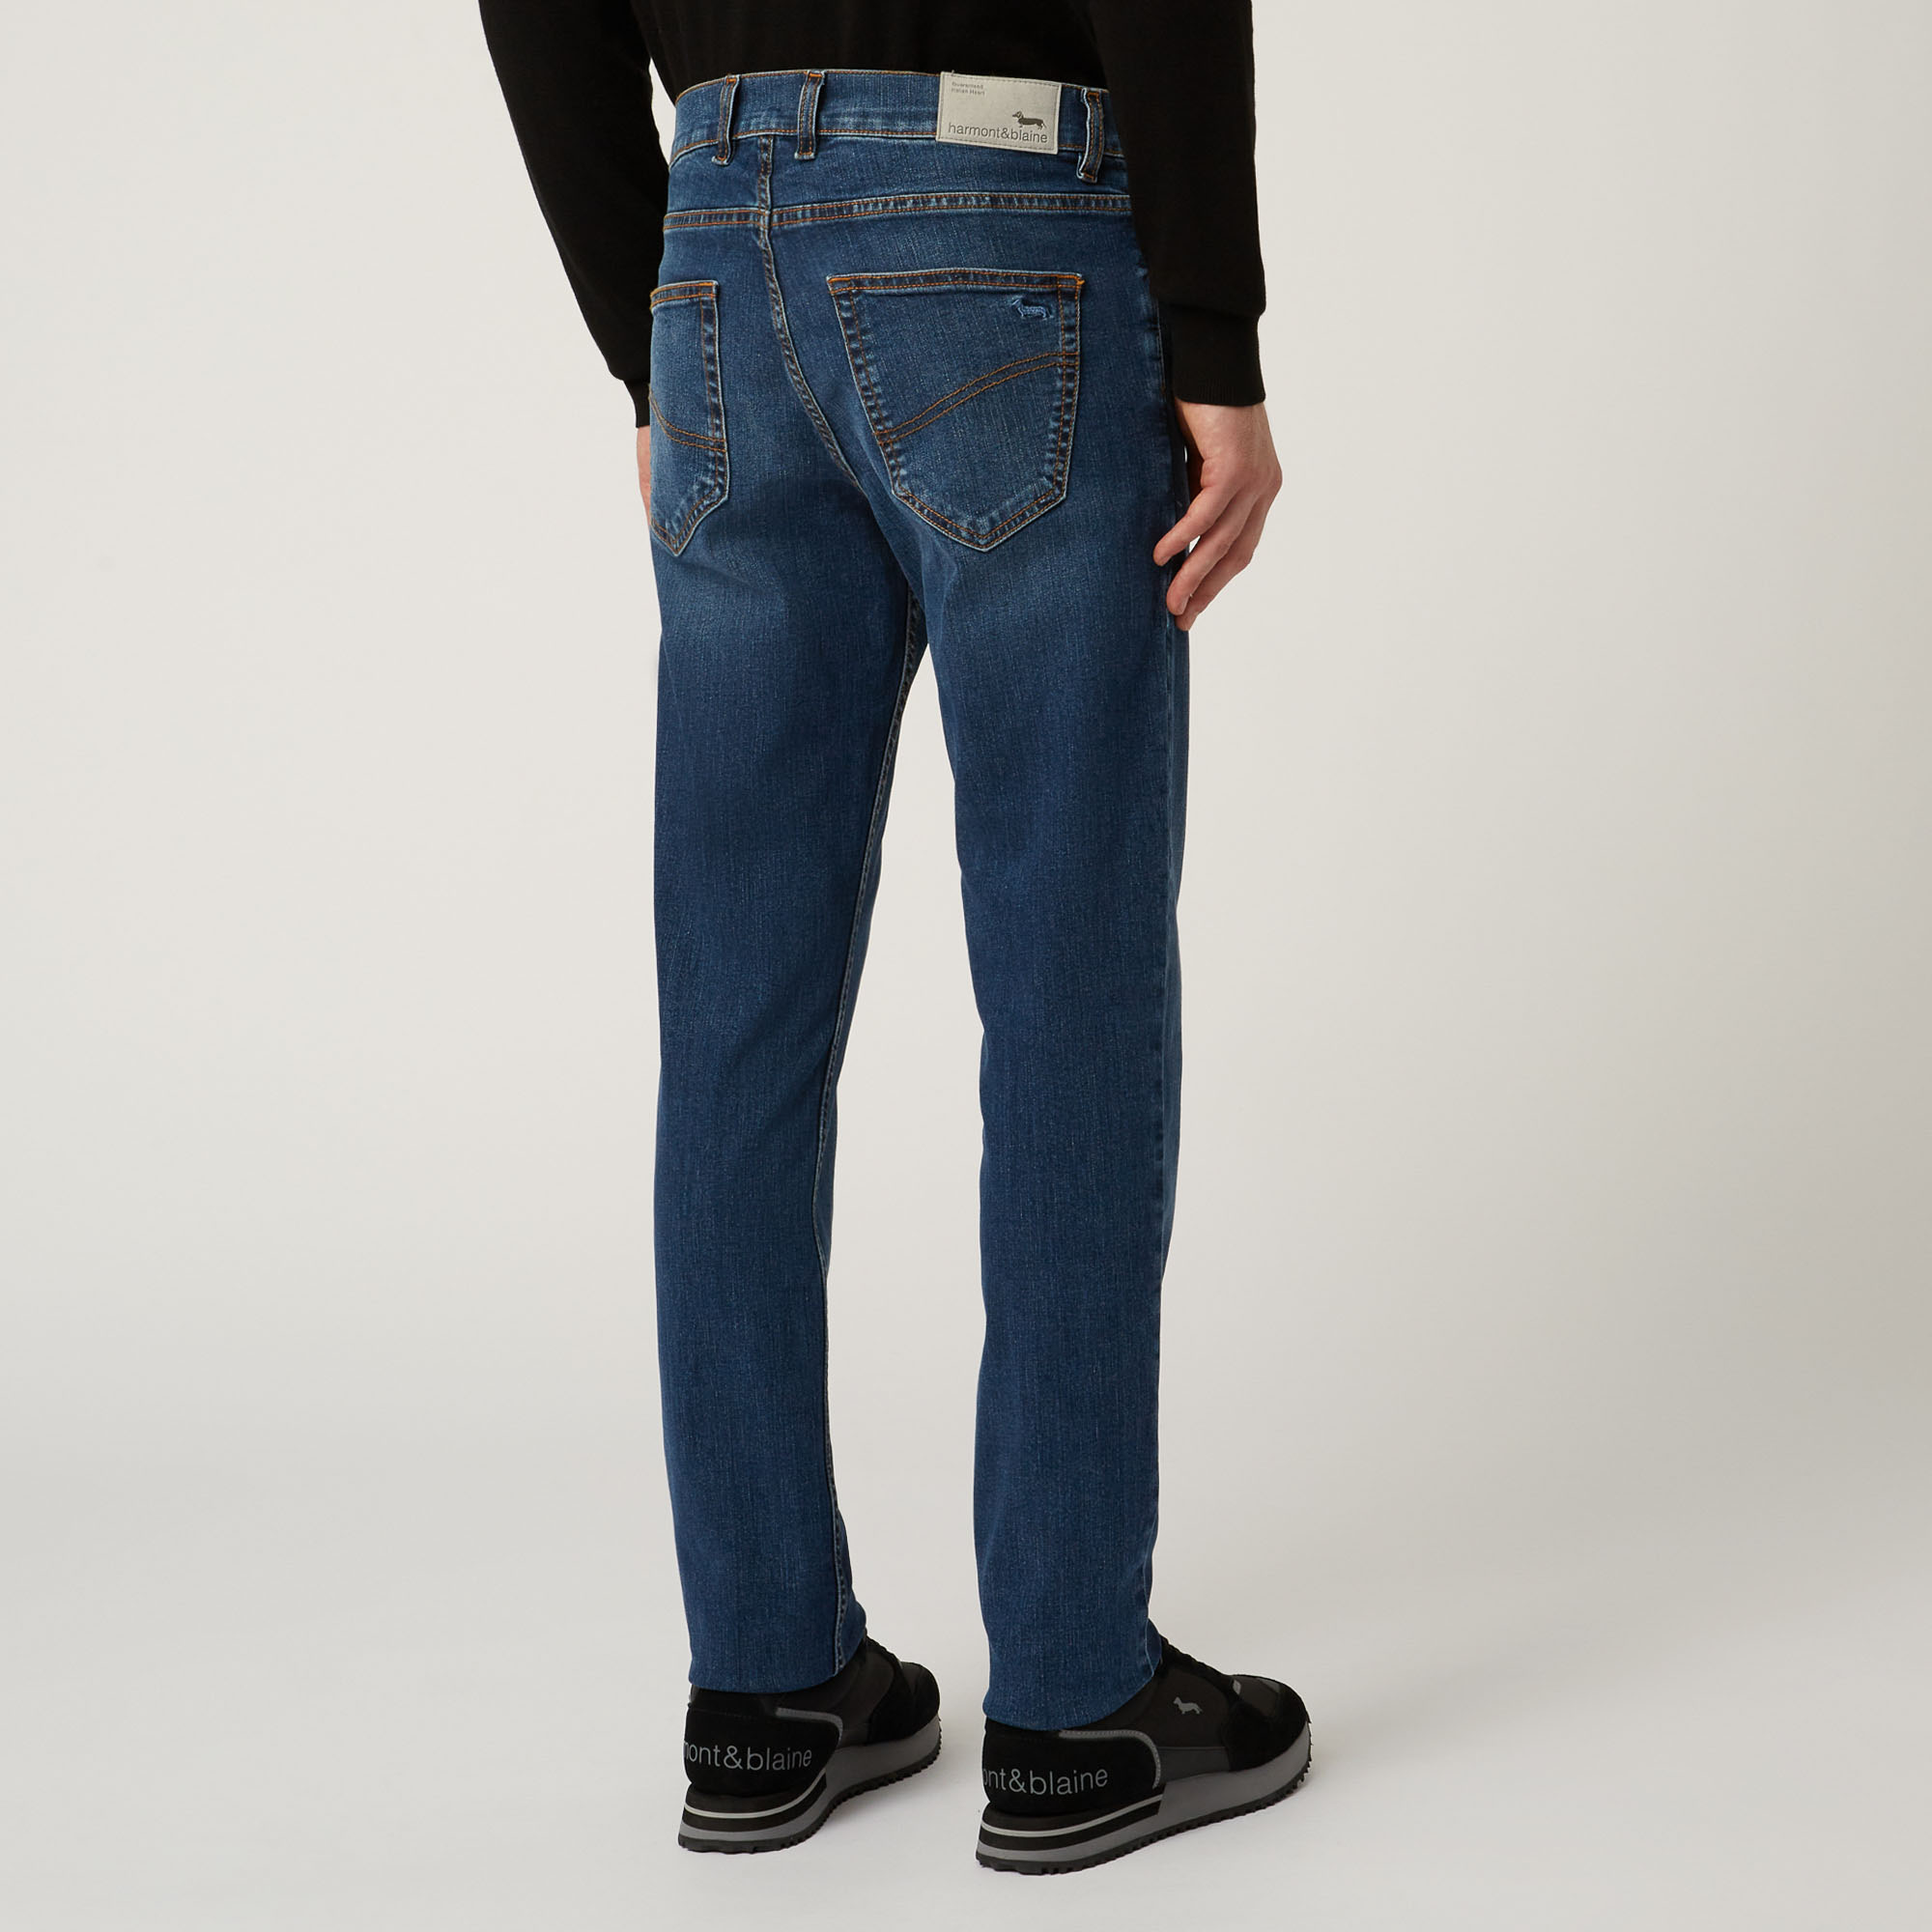 denim pocket Essentials Blaine & 5 Essentials italian jeans: [GLOBAL] | Harmont Luxury